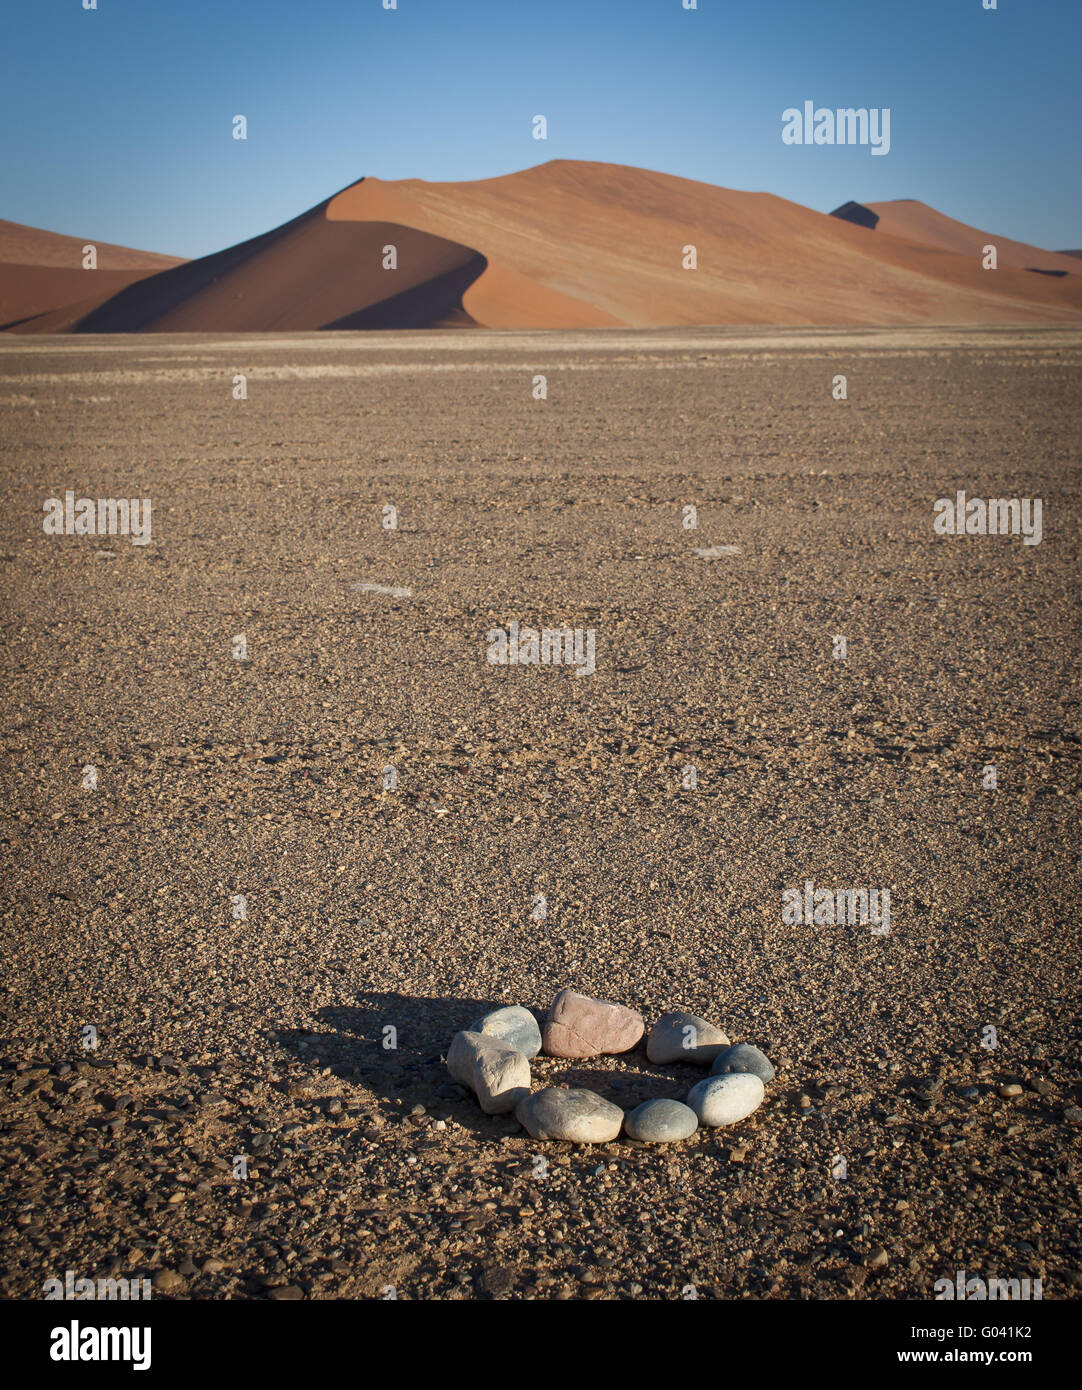 stone circle at the dune Stock Photo